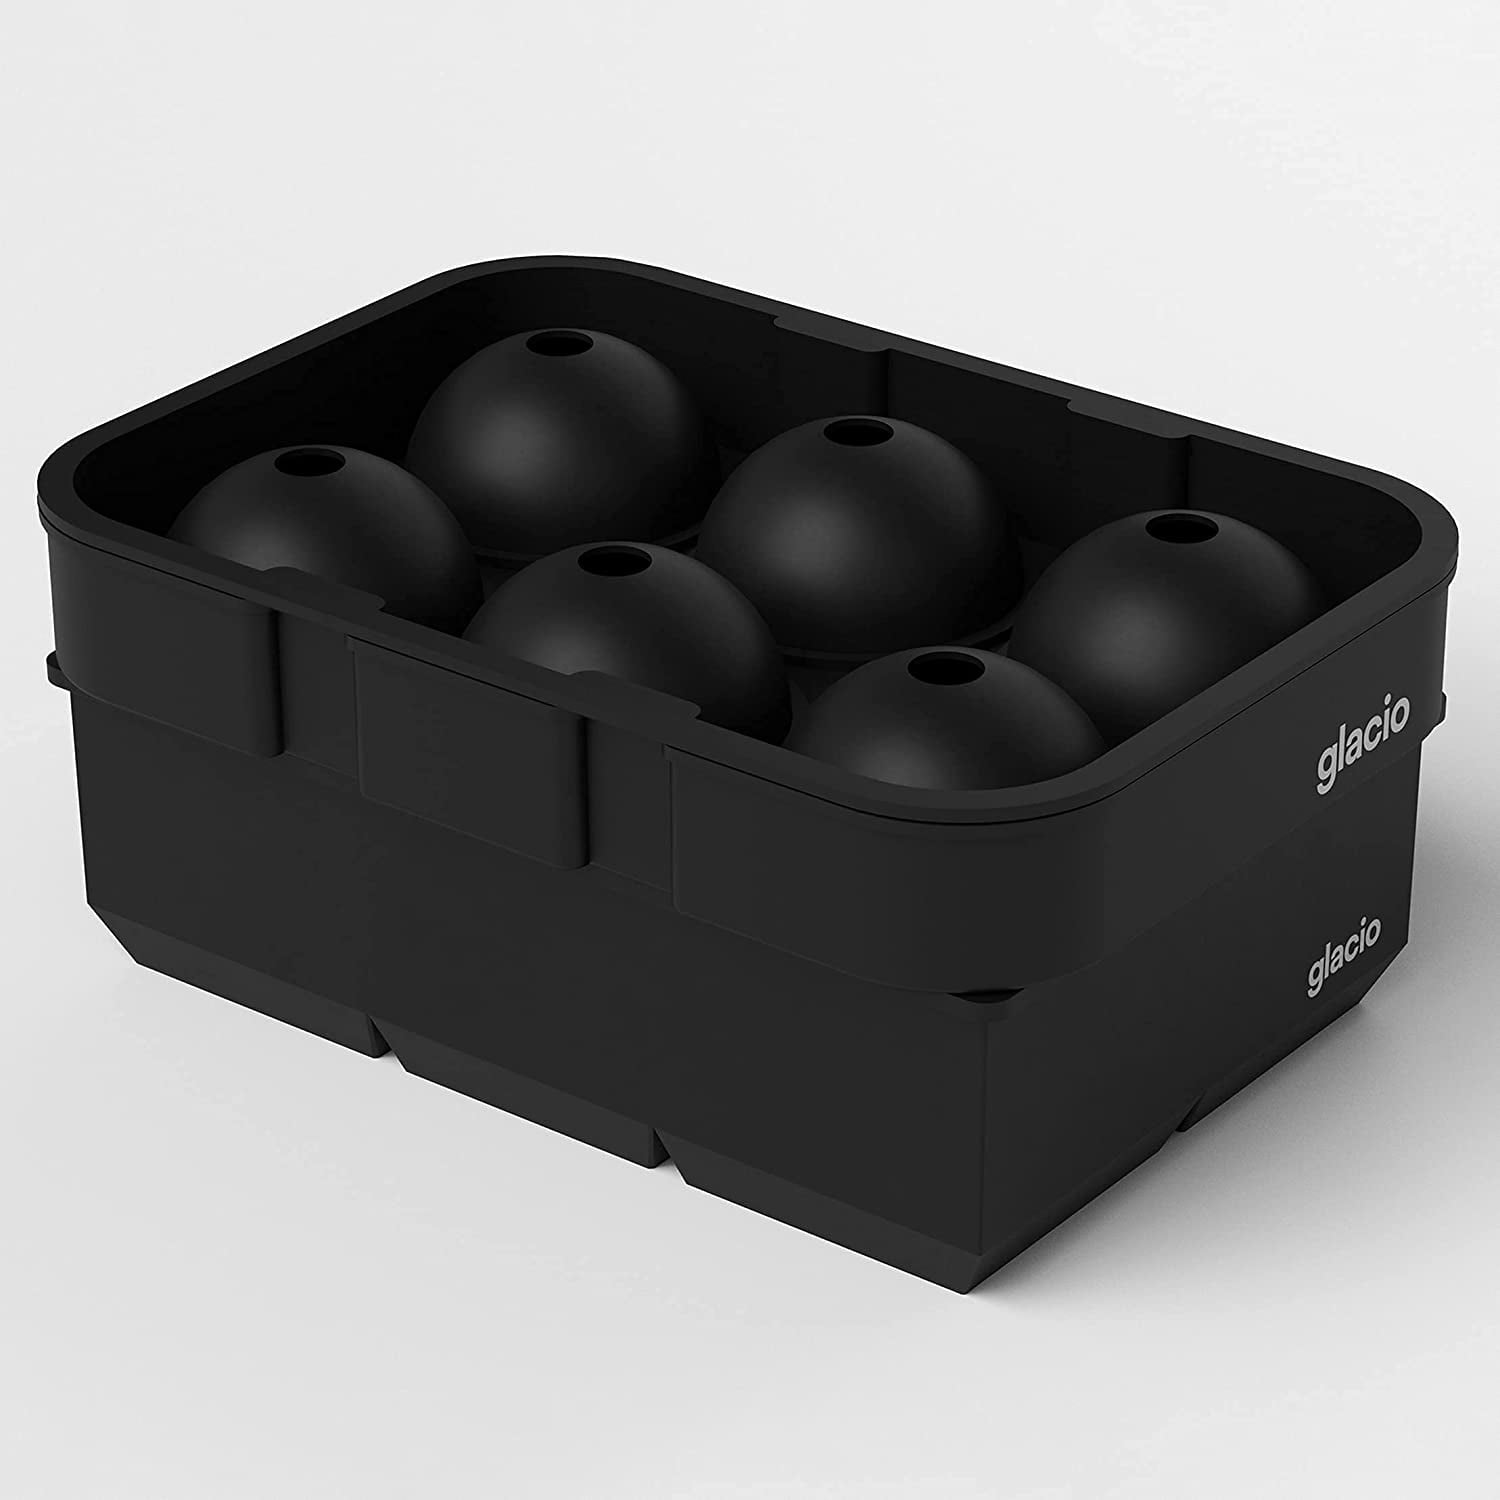 Glacio Ice Cube Molds - Big Cubes & Large Sphere Ice Mold Set, Black